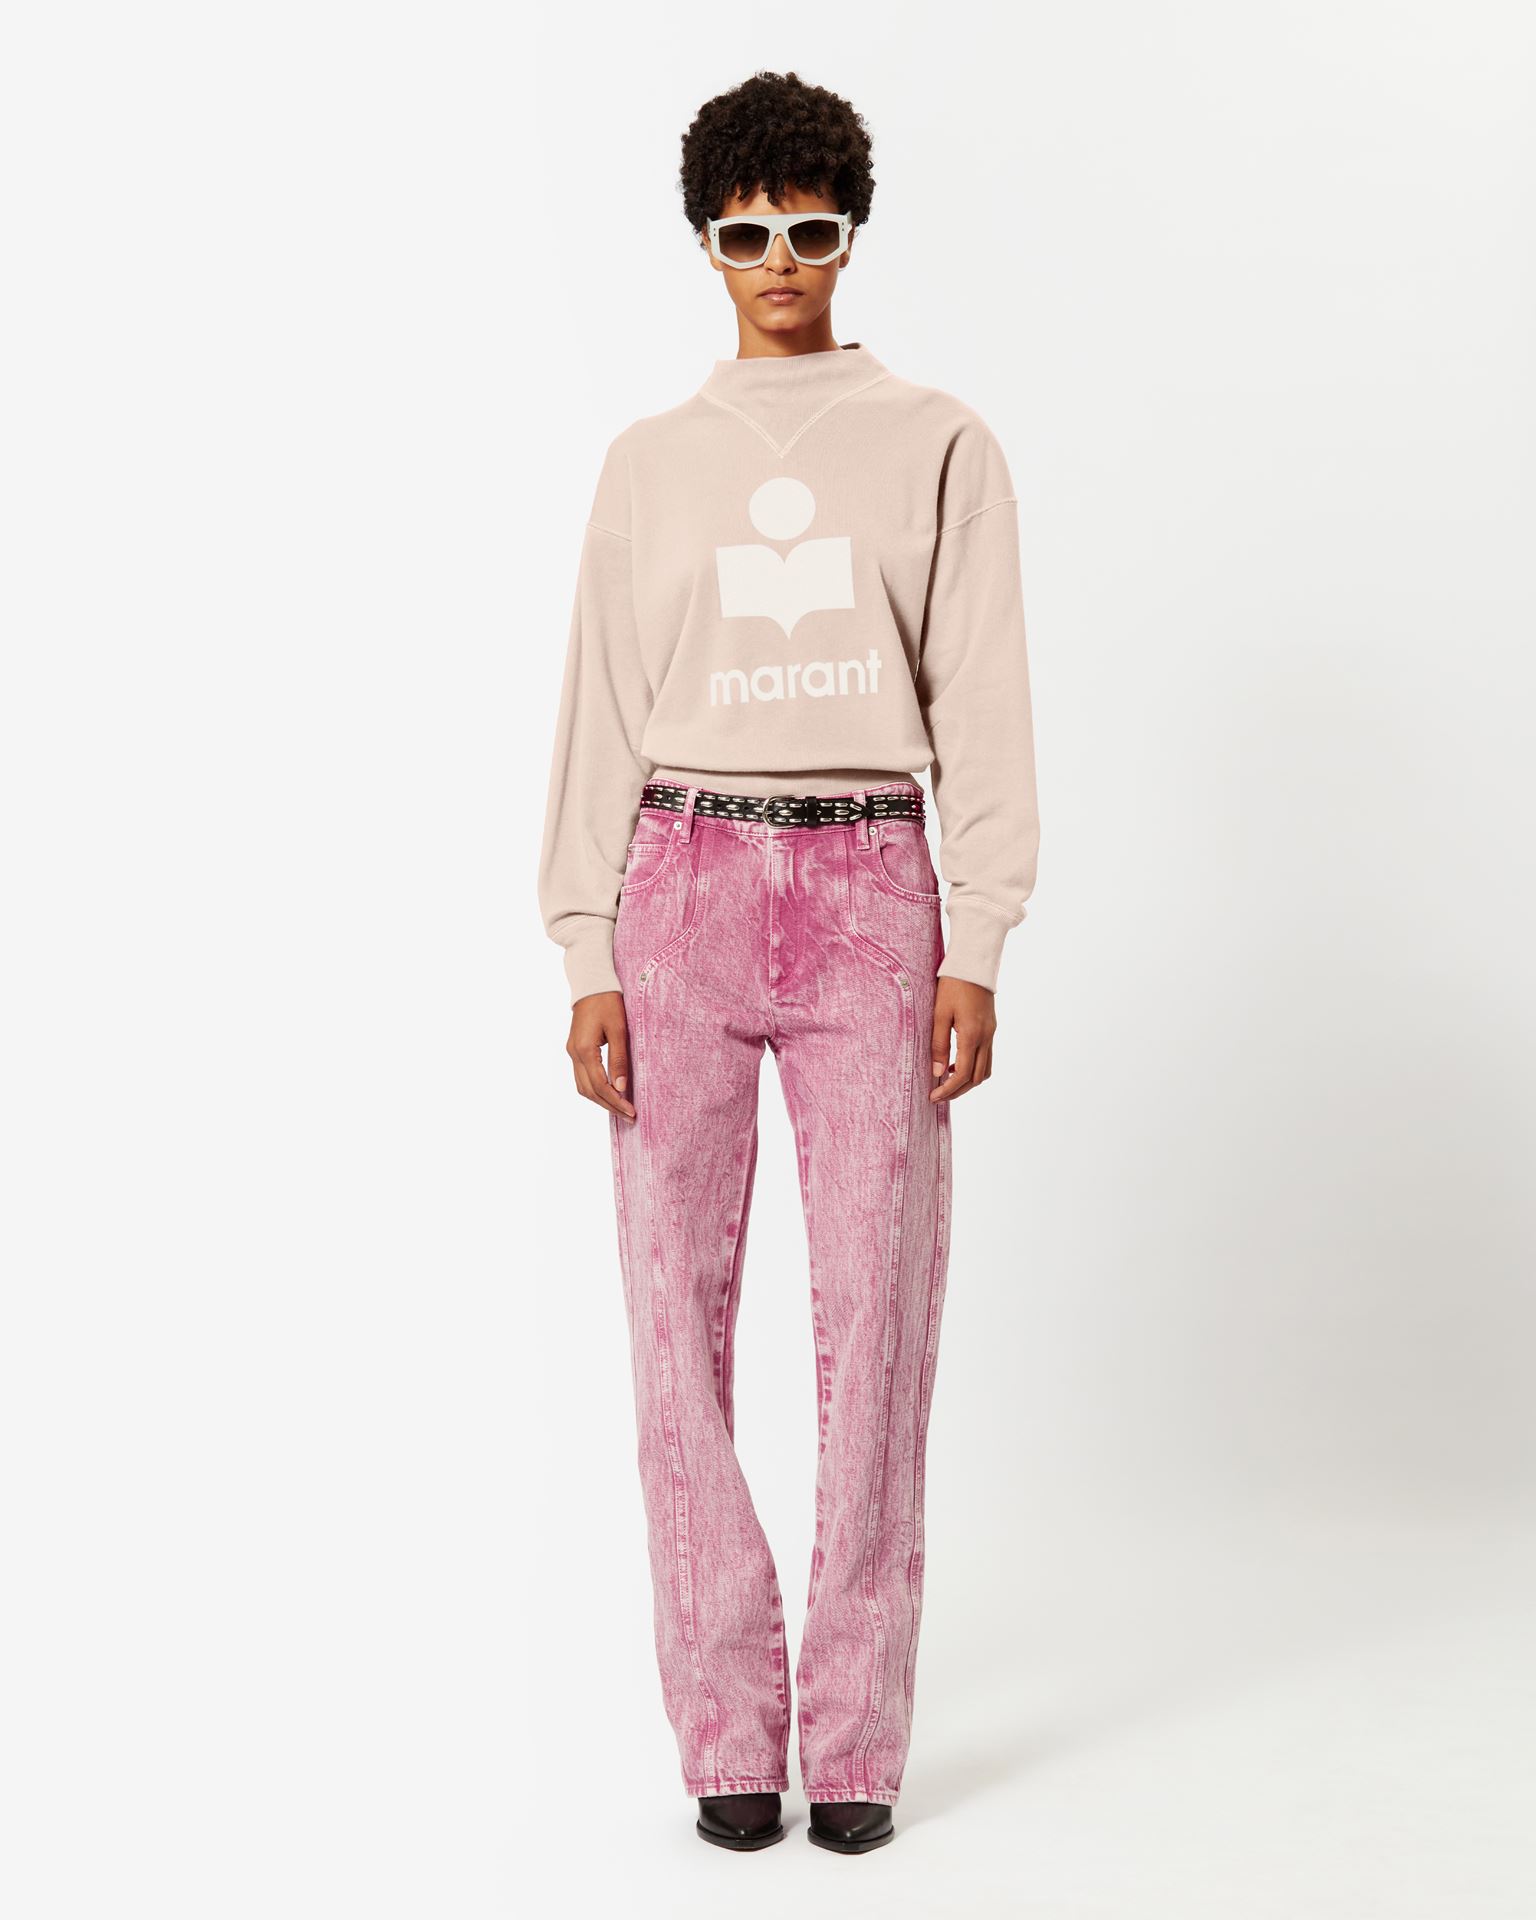 Isabel Marant Marant Étoile, Moby Logo Sweatshirt - Women - Pink